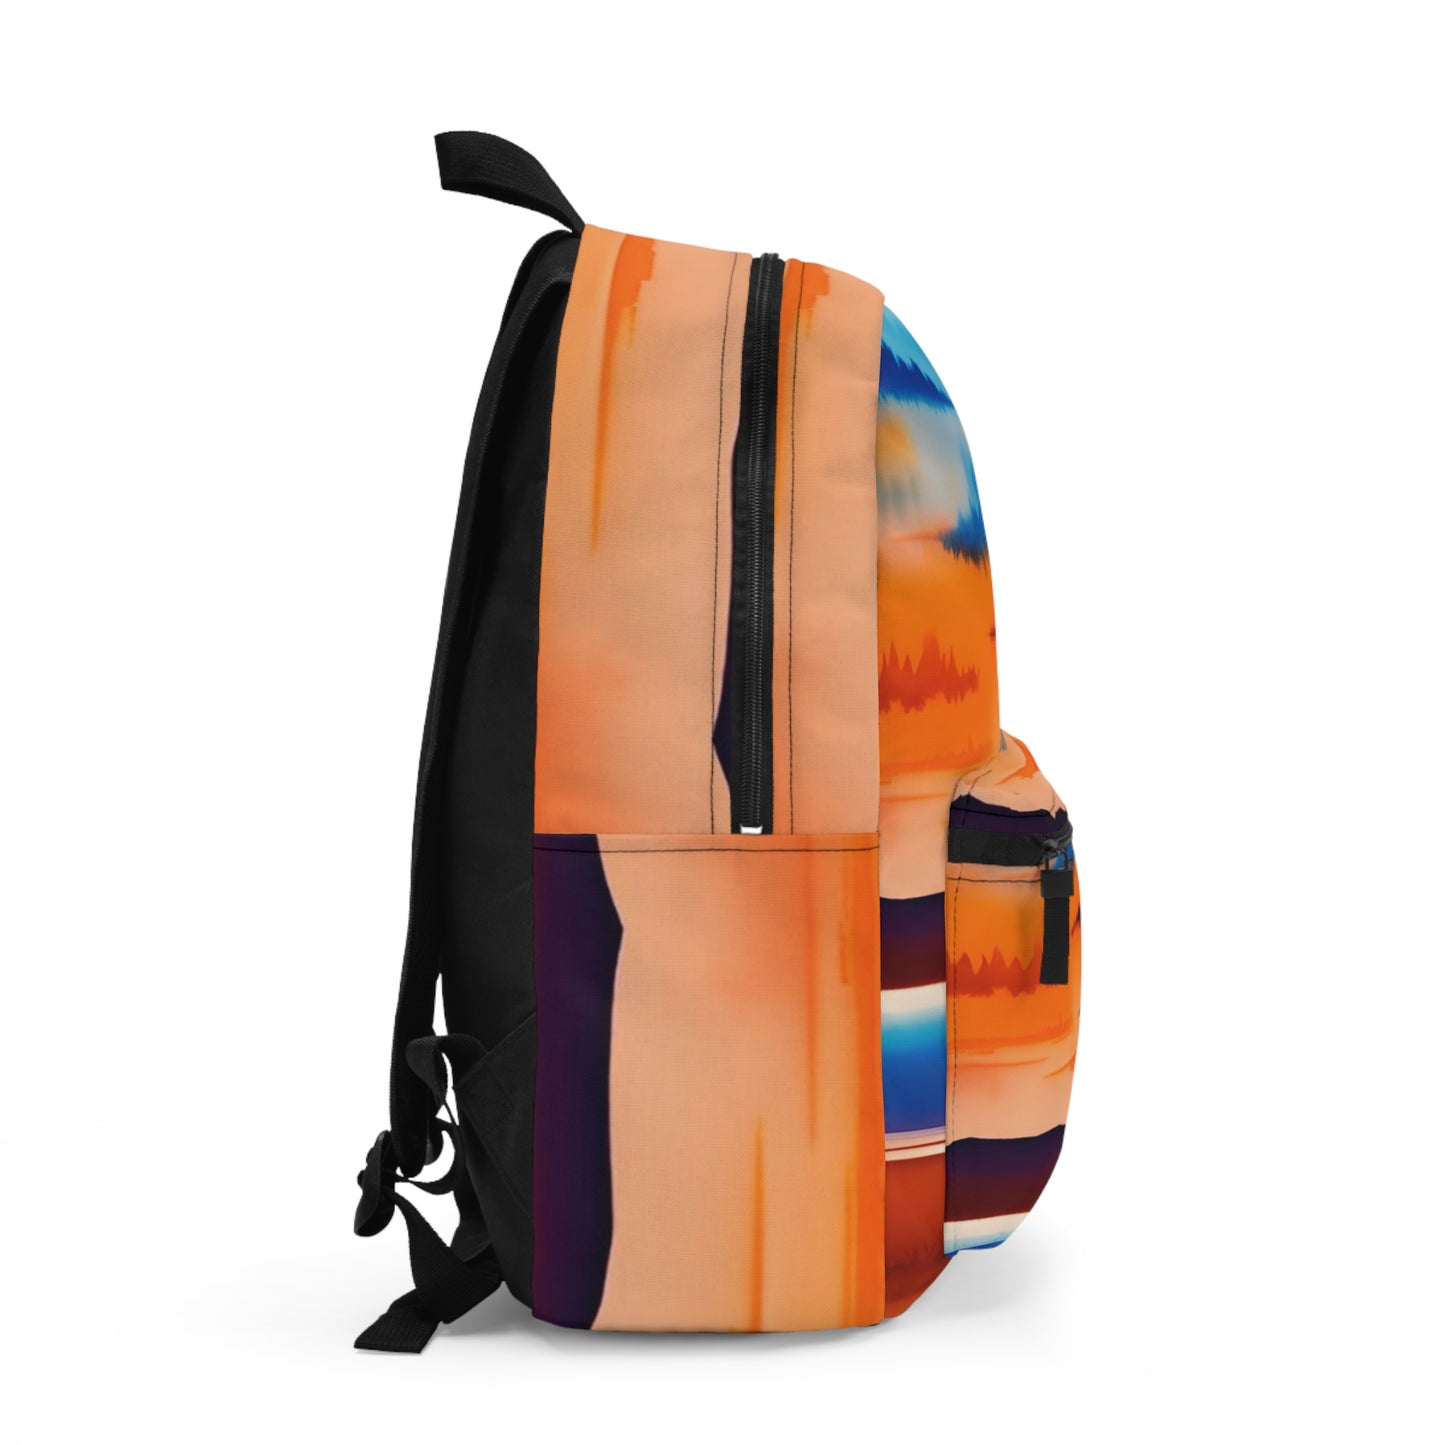 Adobe Sky Backpack